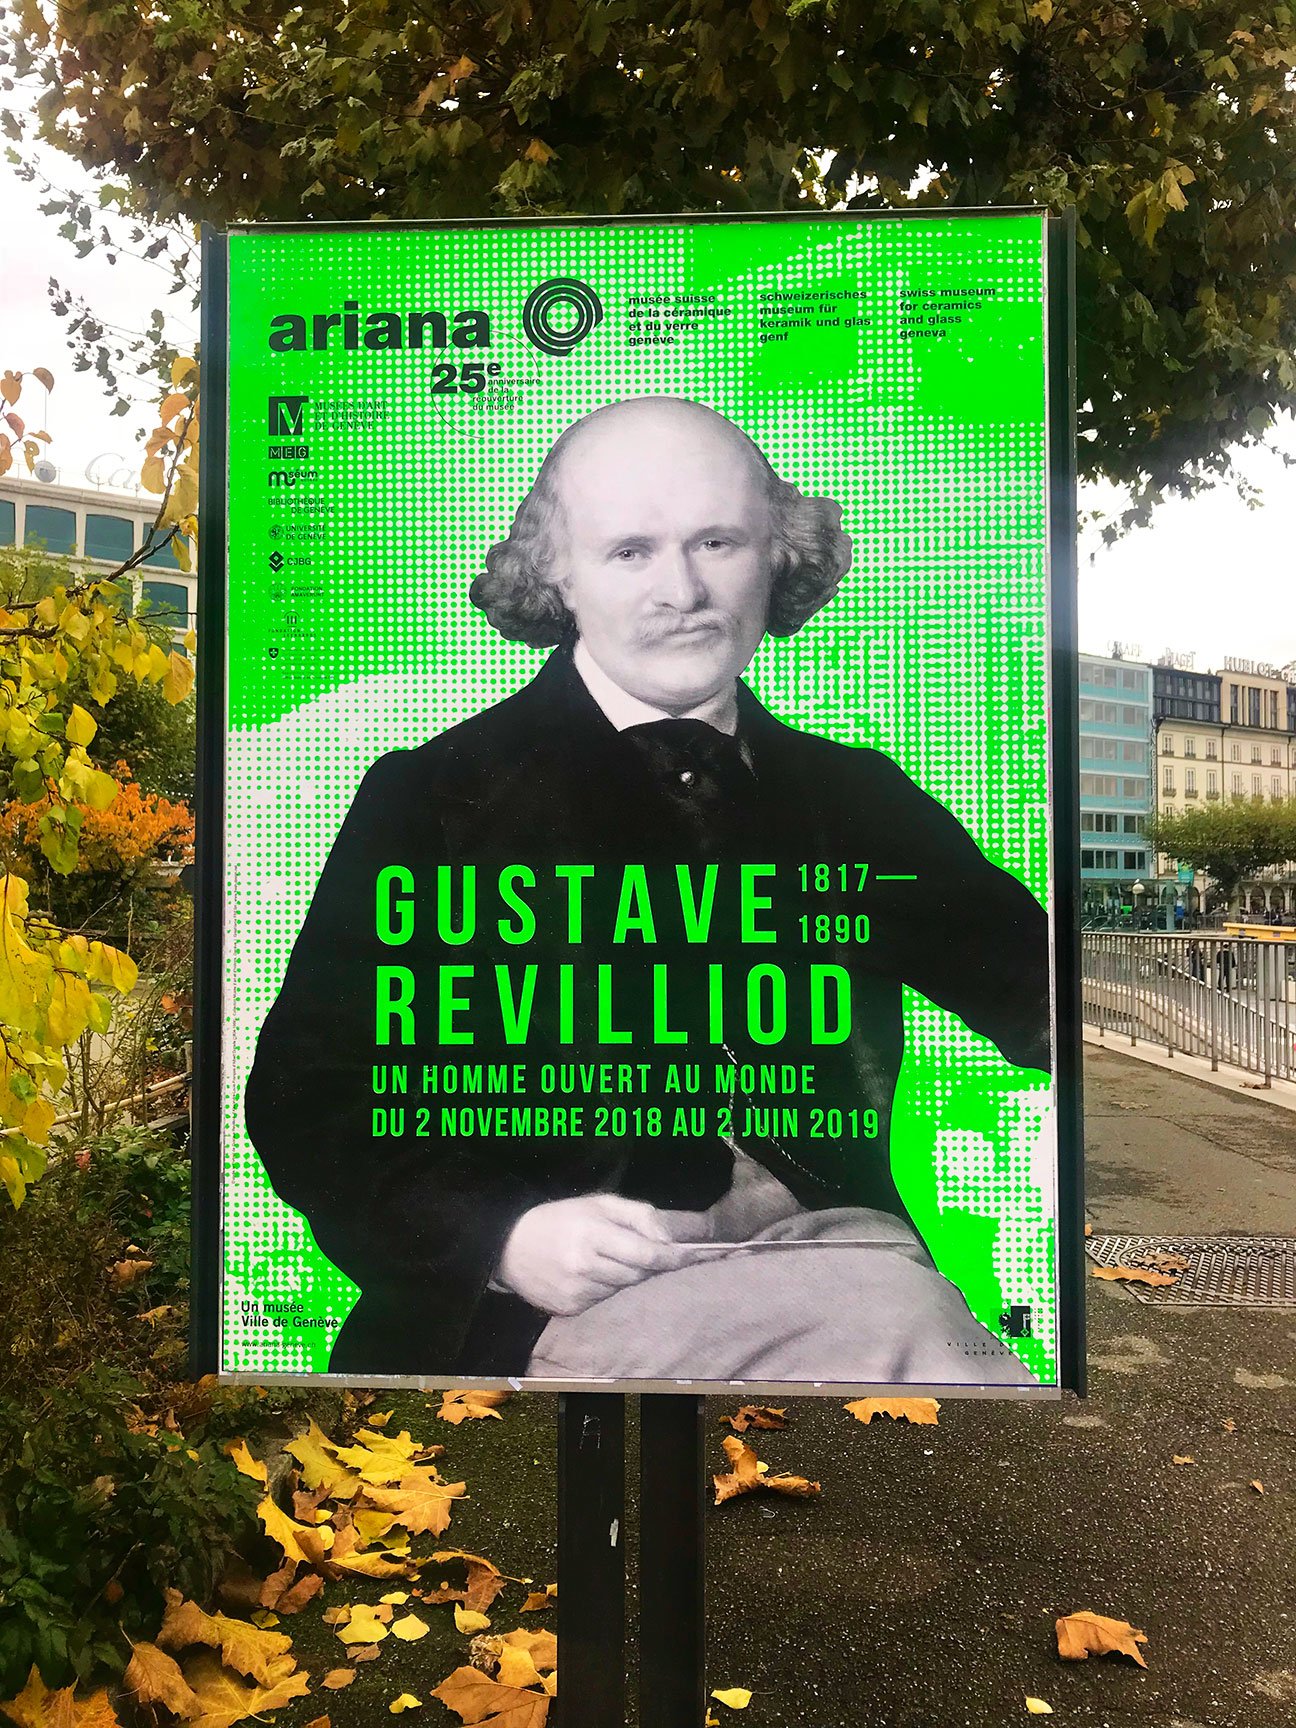 fabien-cuffel-exposition-revilliod-musee-ariana-geneve-affiche